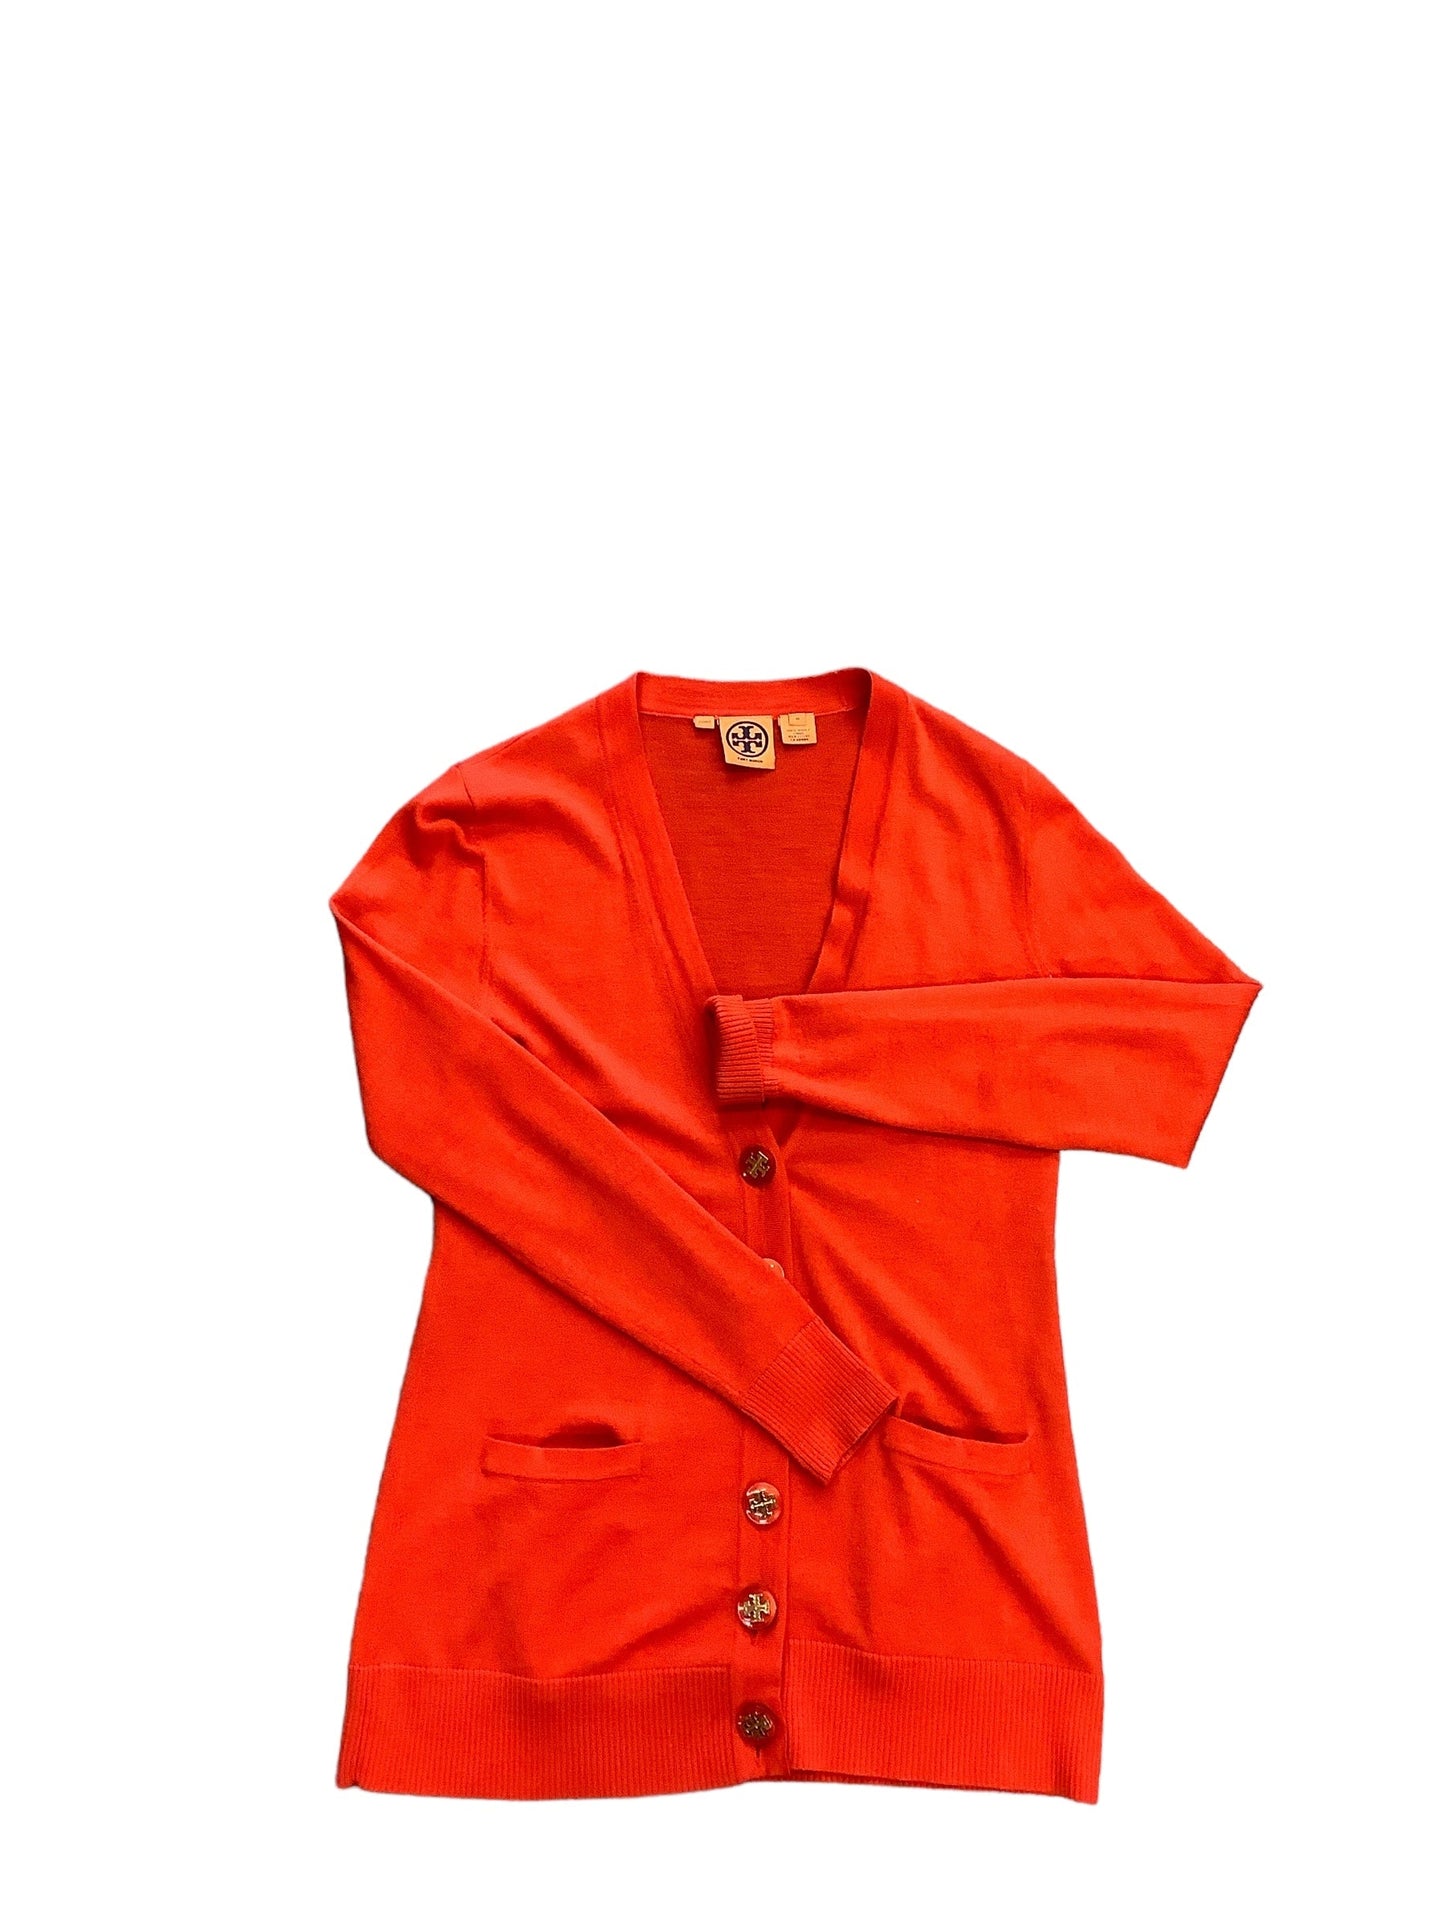 Orange Sweater Cardigan Designer Tory Burch, Size M